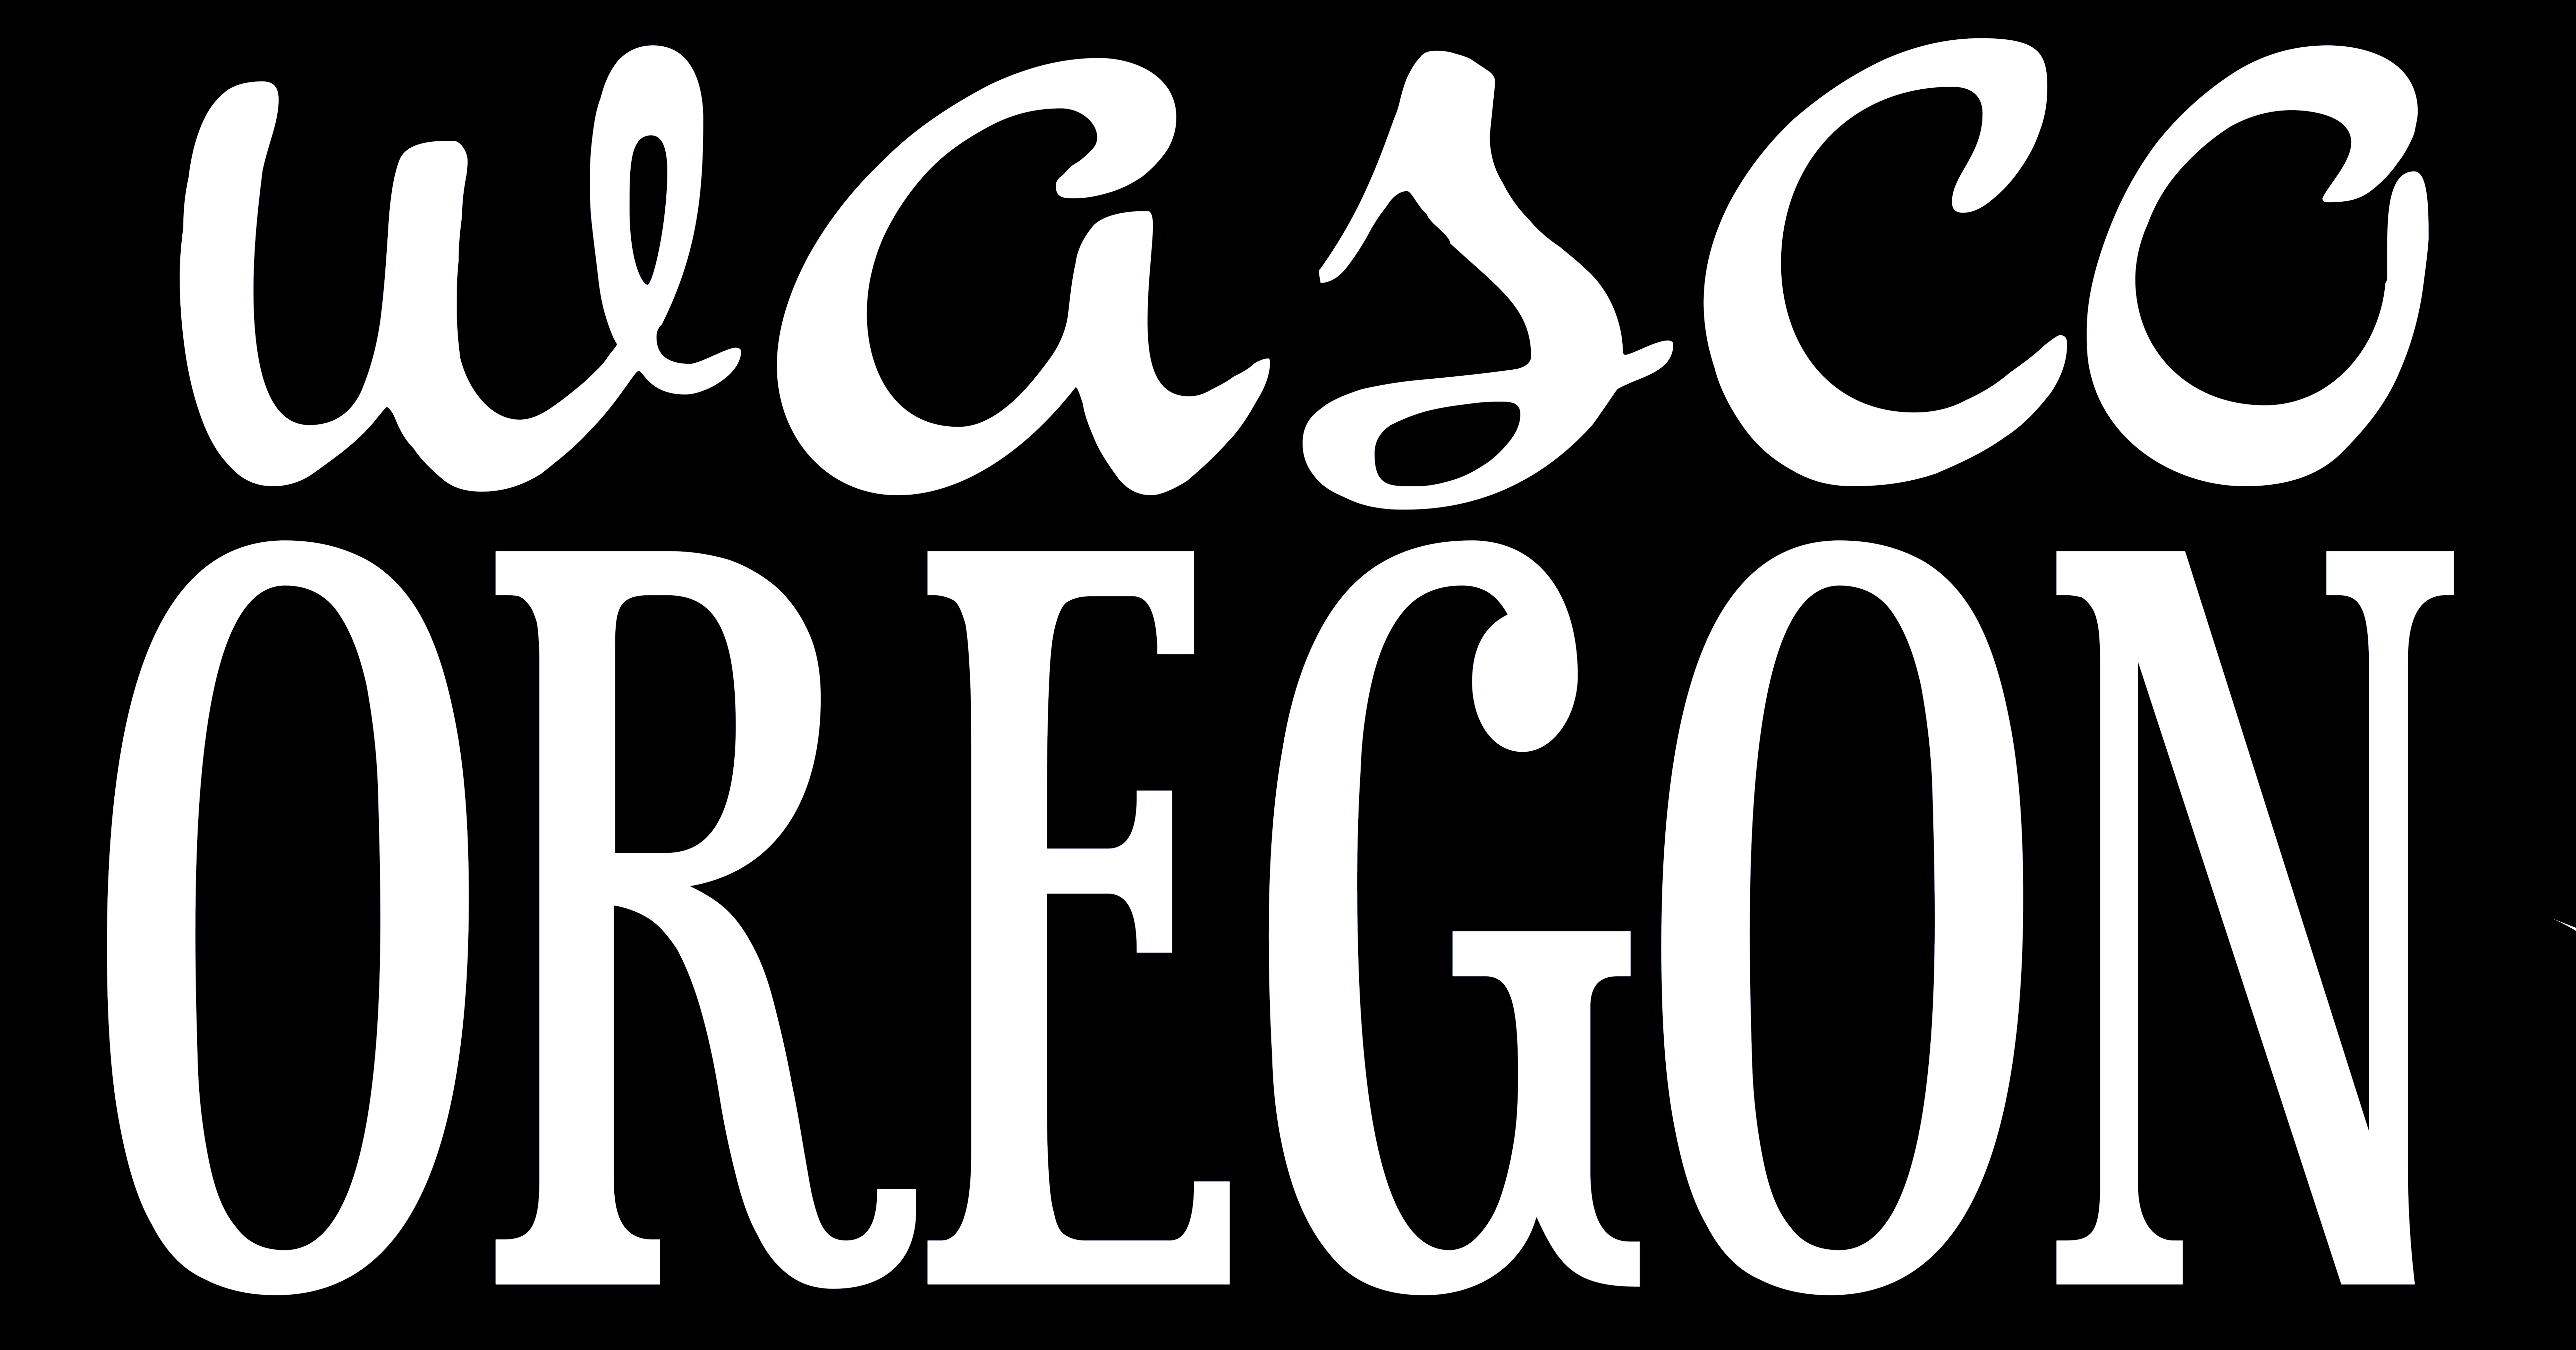 City of Wasco, Oregon